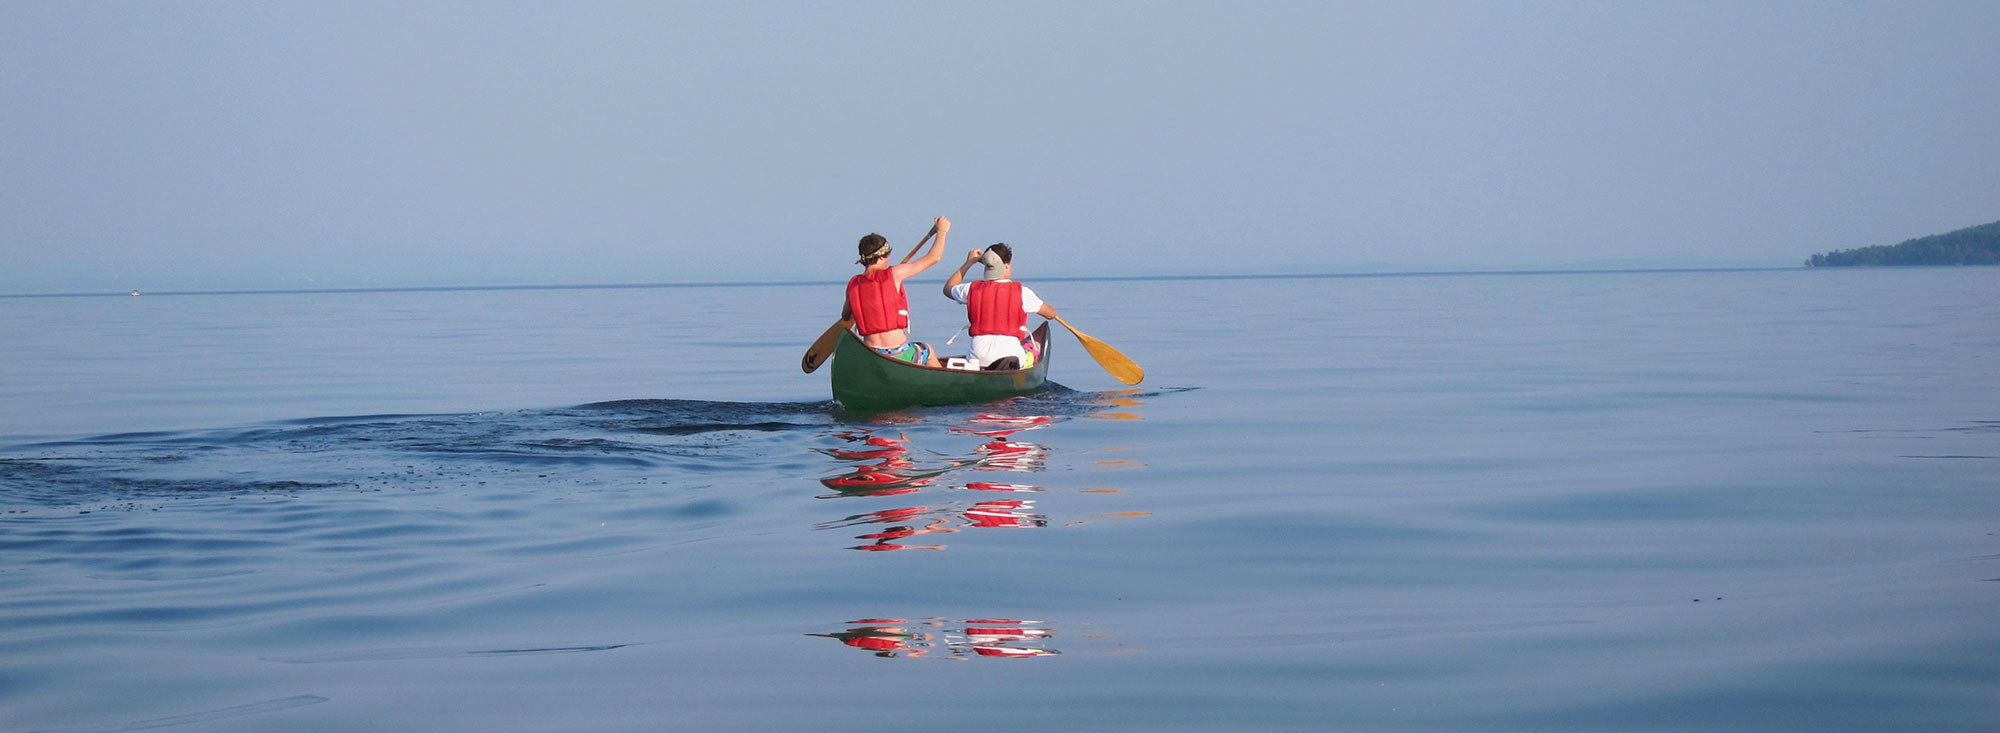 Boys in Canoe Paddling in Middle of Lake